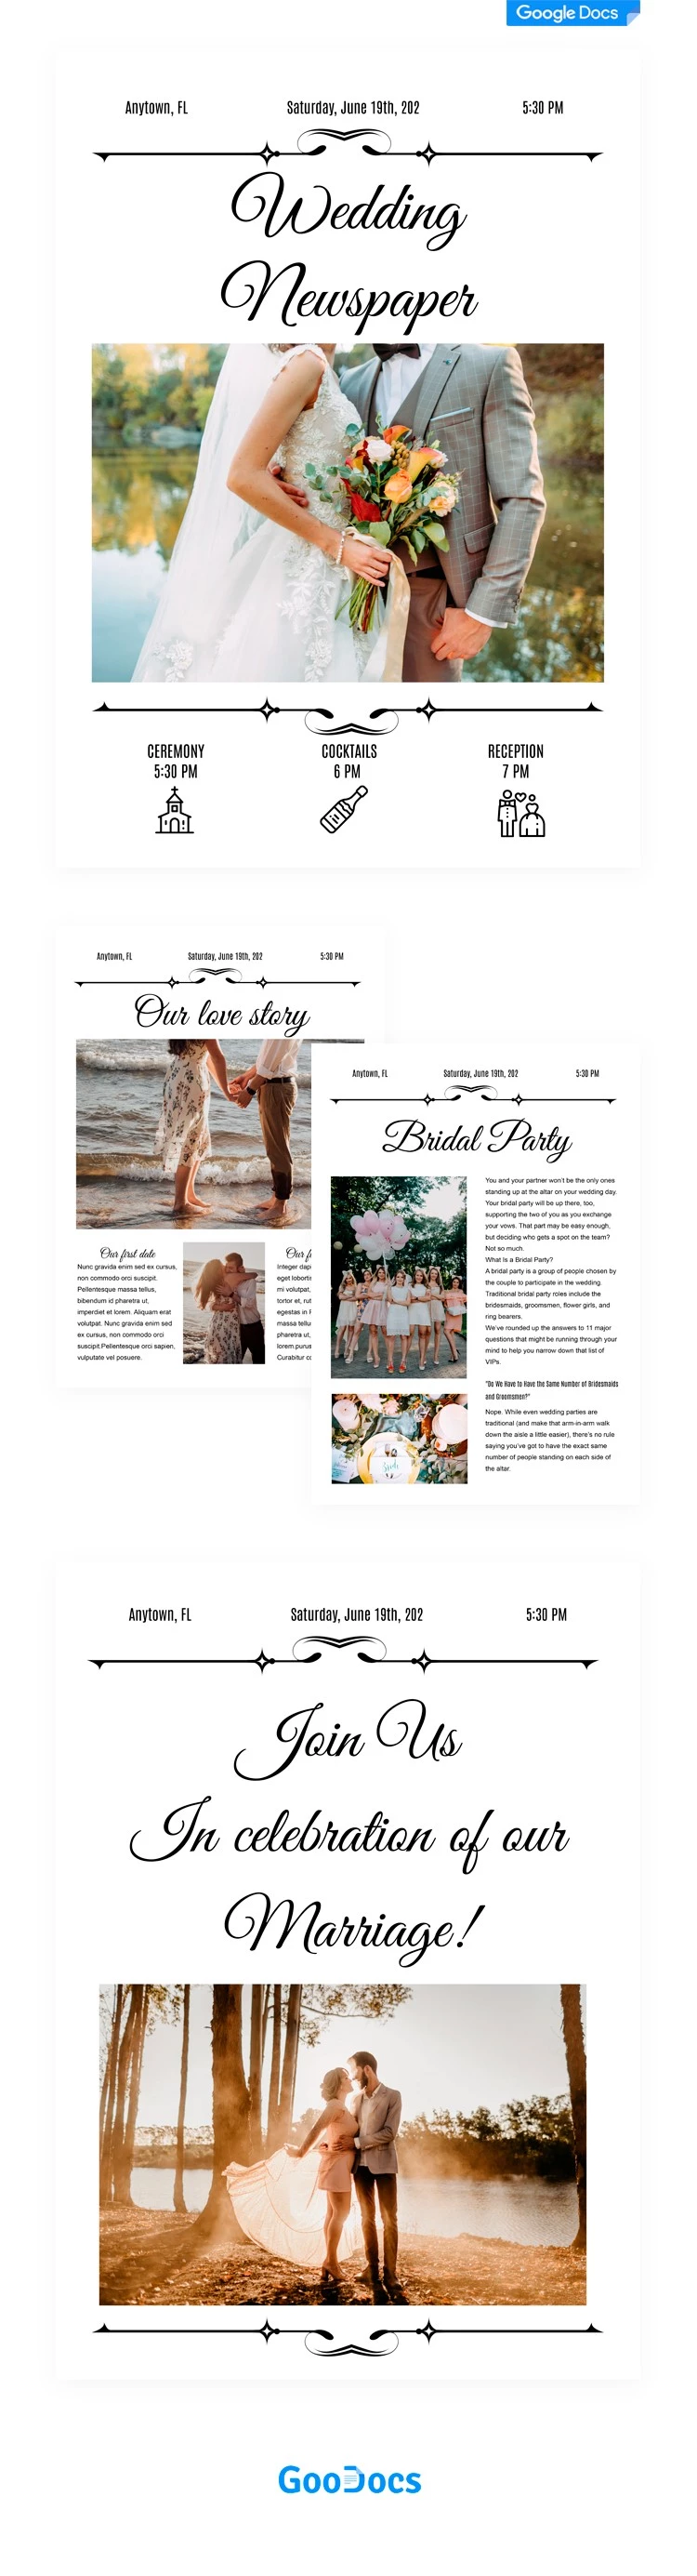 Wedding Day Newspaper - free Google Docs Template - 10062024